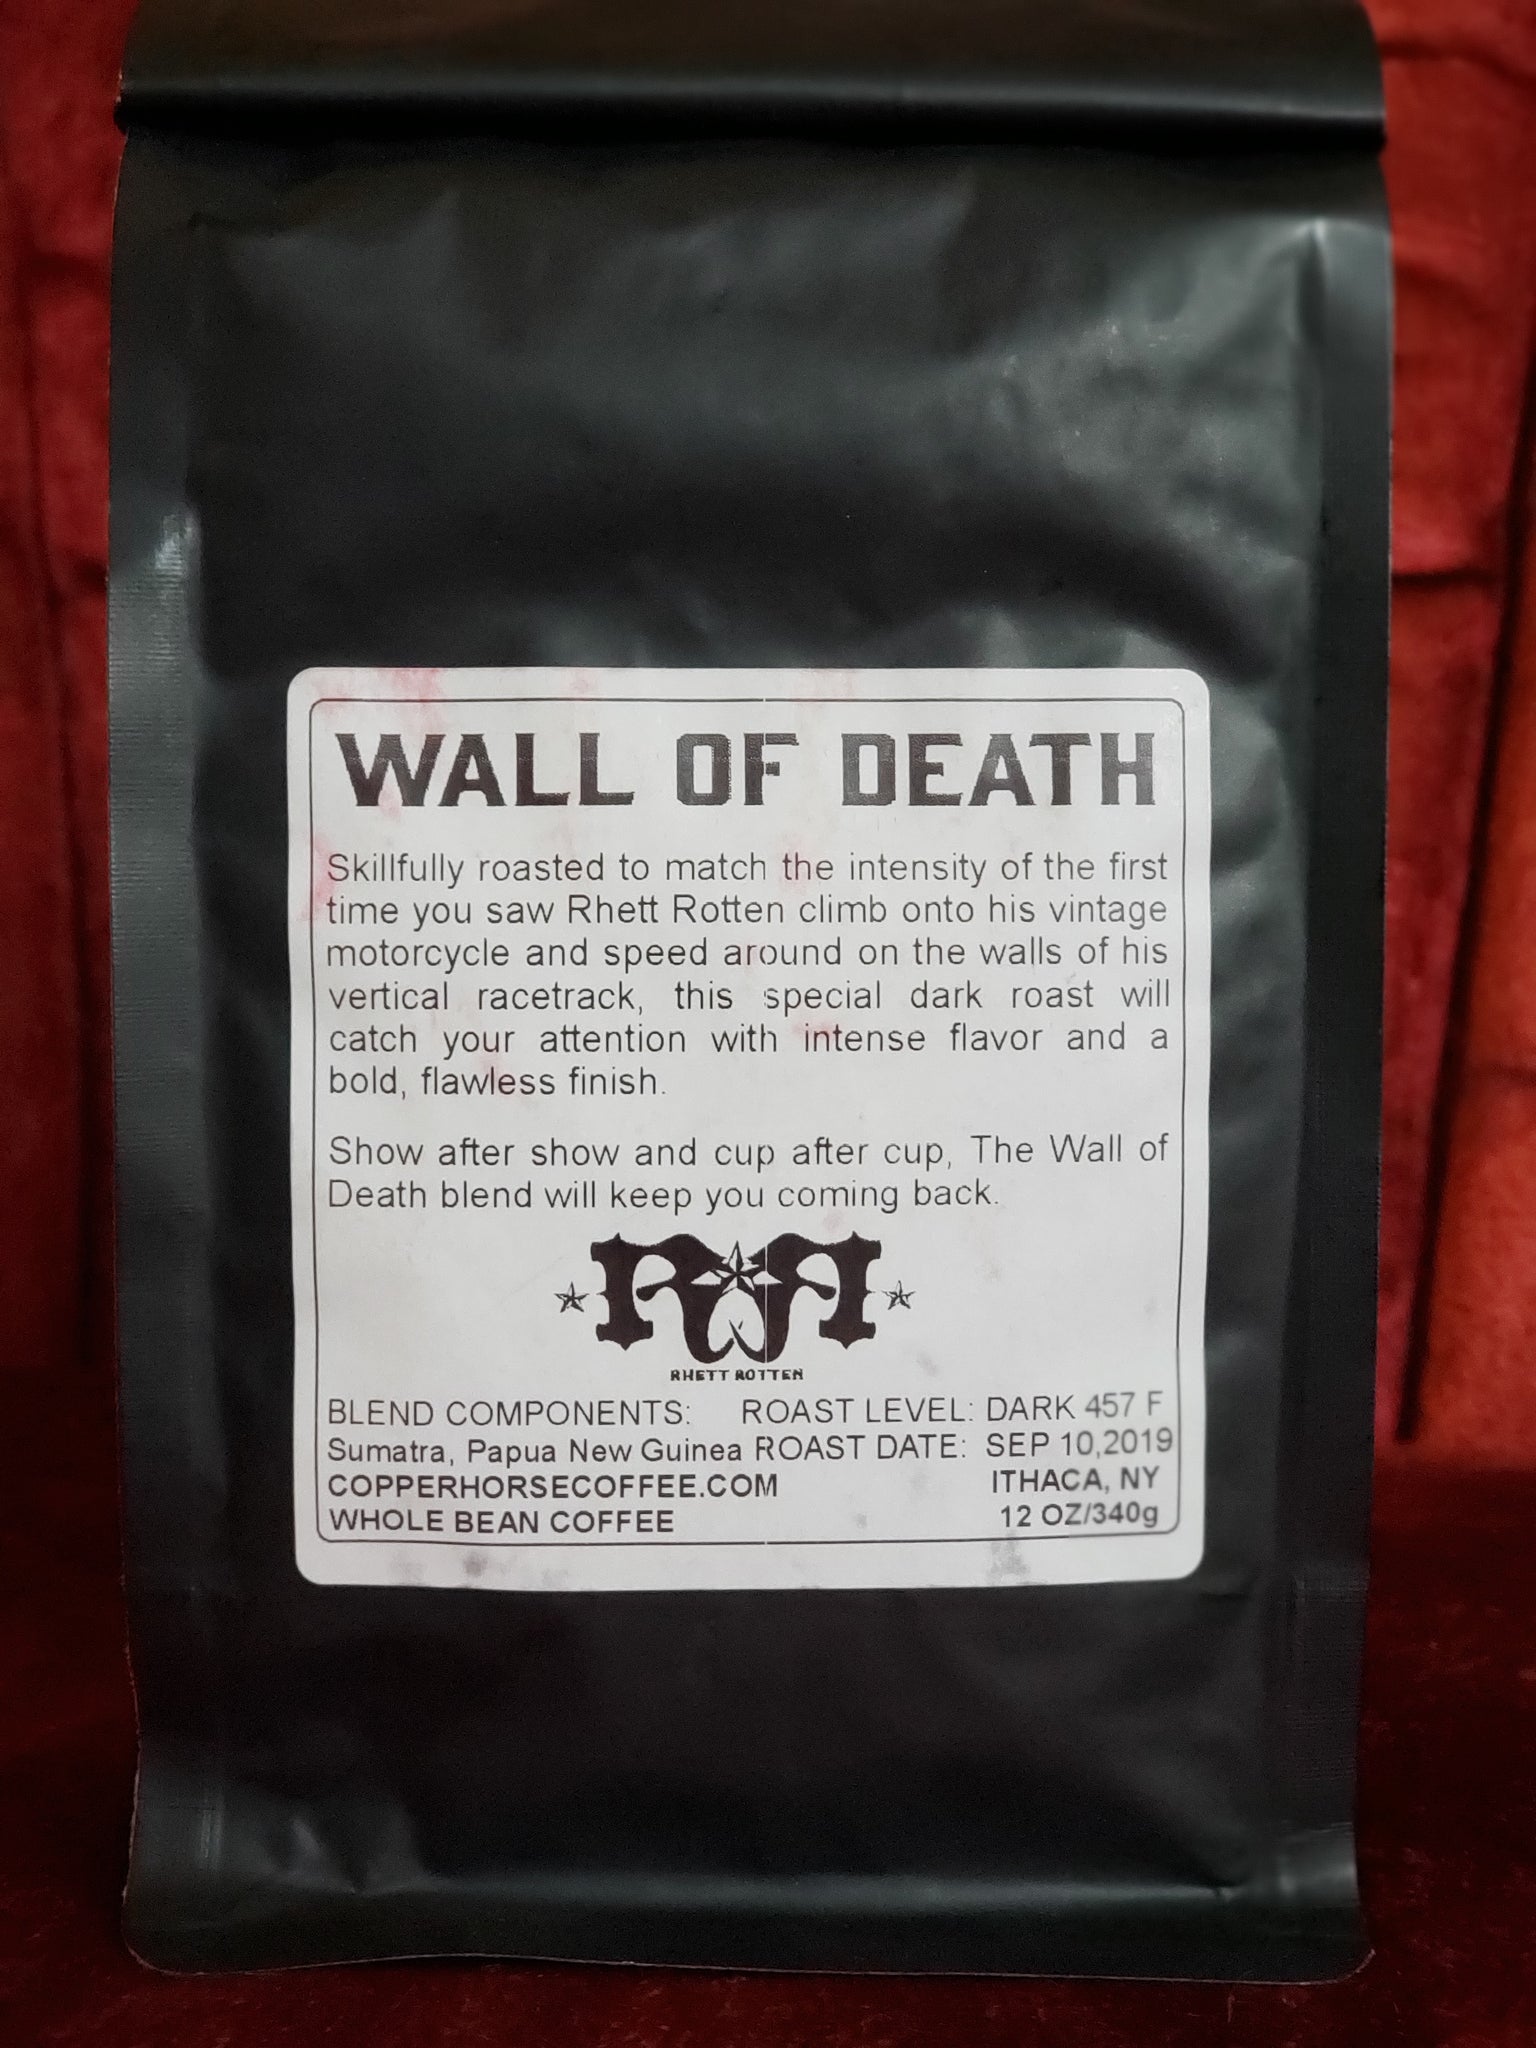 Wall of Death Blend, dark roast